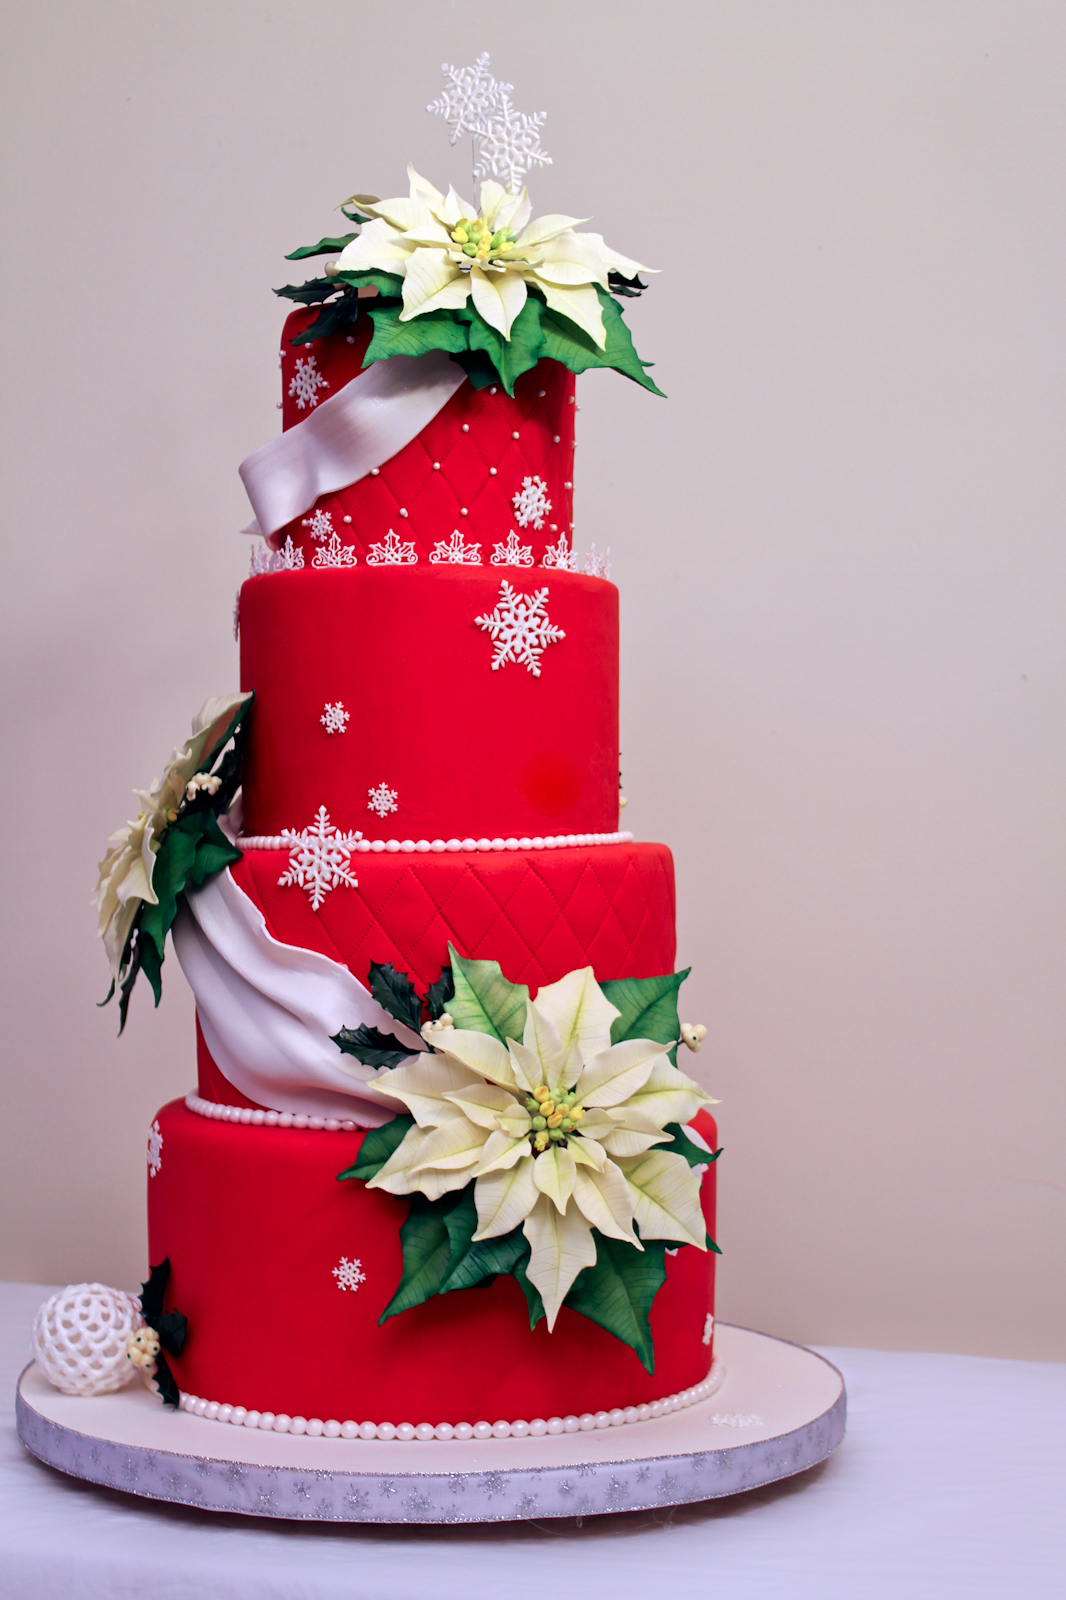 The Cake Engineer: Holiday Poinsettia Cake